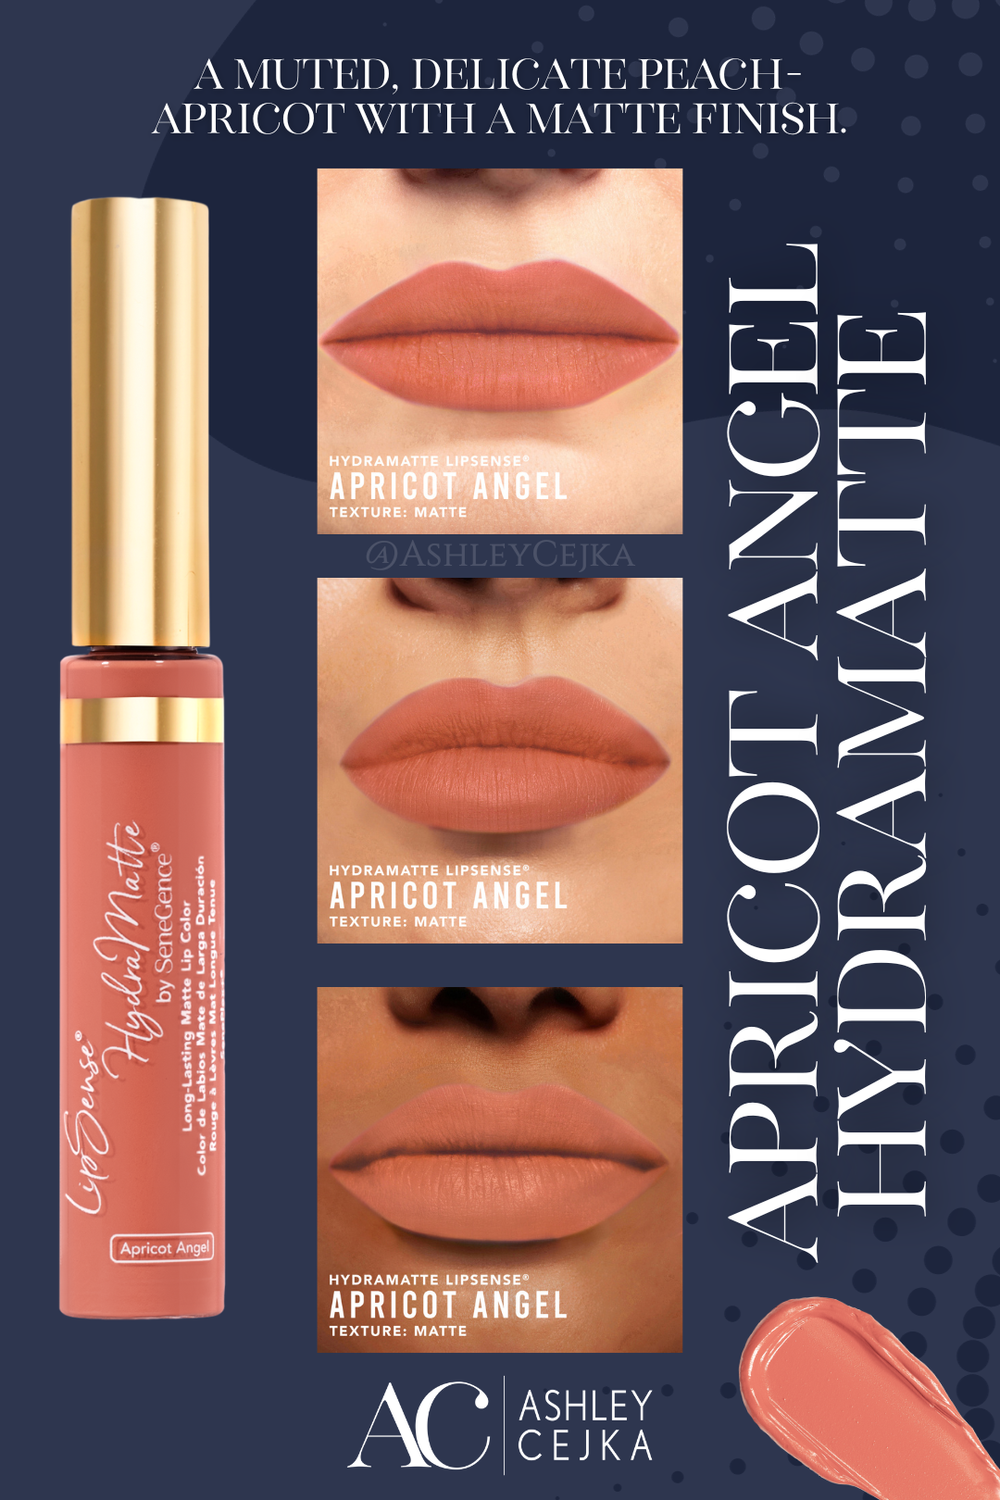 Apricot Angel HydraMatte LipSense SeneGence Ashley Cejka Diverse Skin Tones.png